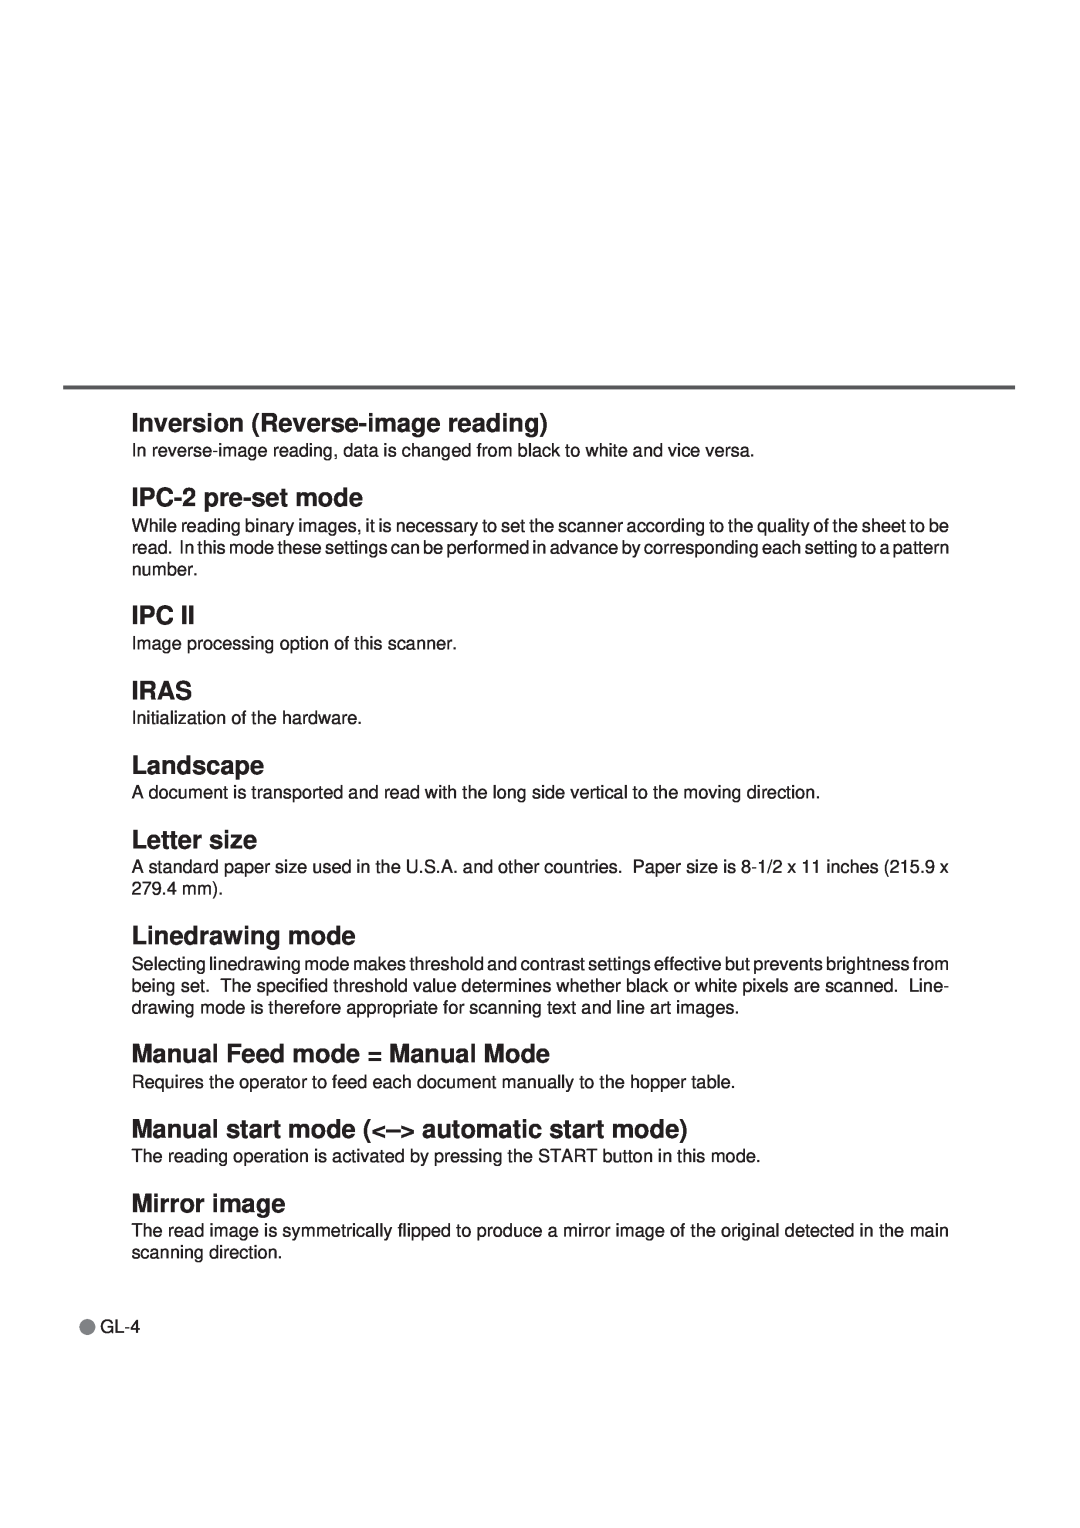 Fujitsu M3099GH manual Inversion Reverse-image reading, IPC-2 pre-set mode, Iras, Landscape, Letter size, Linedrawing mode 